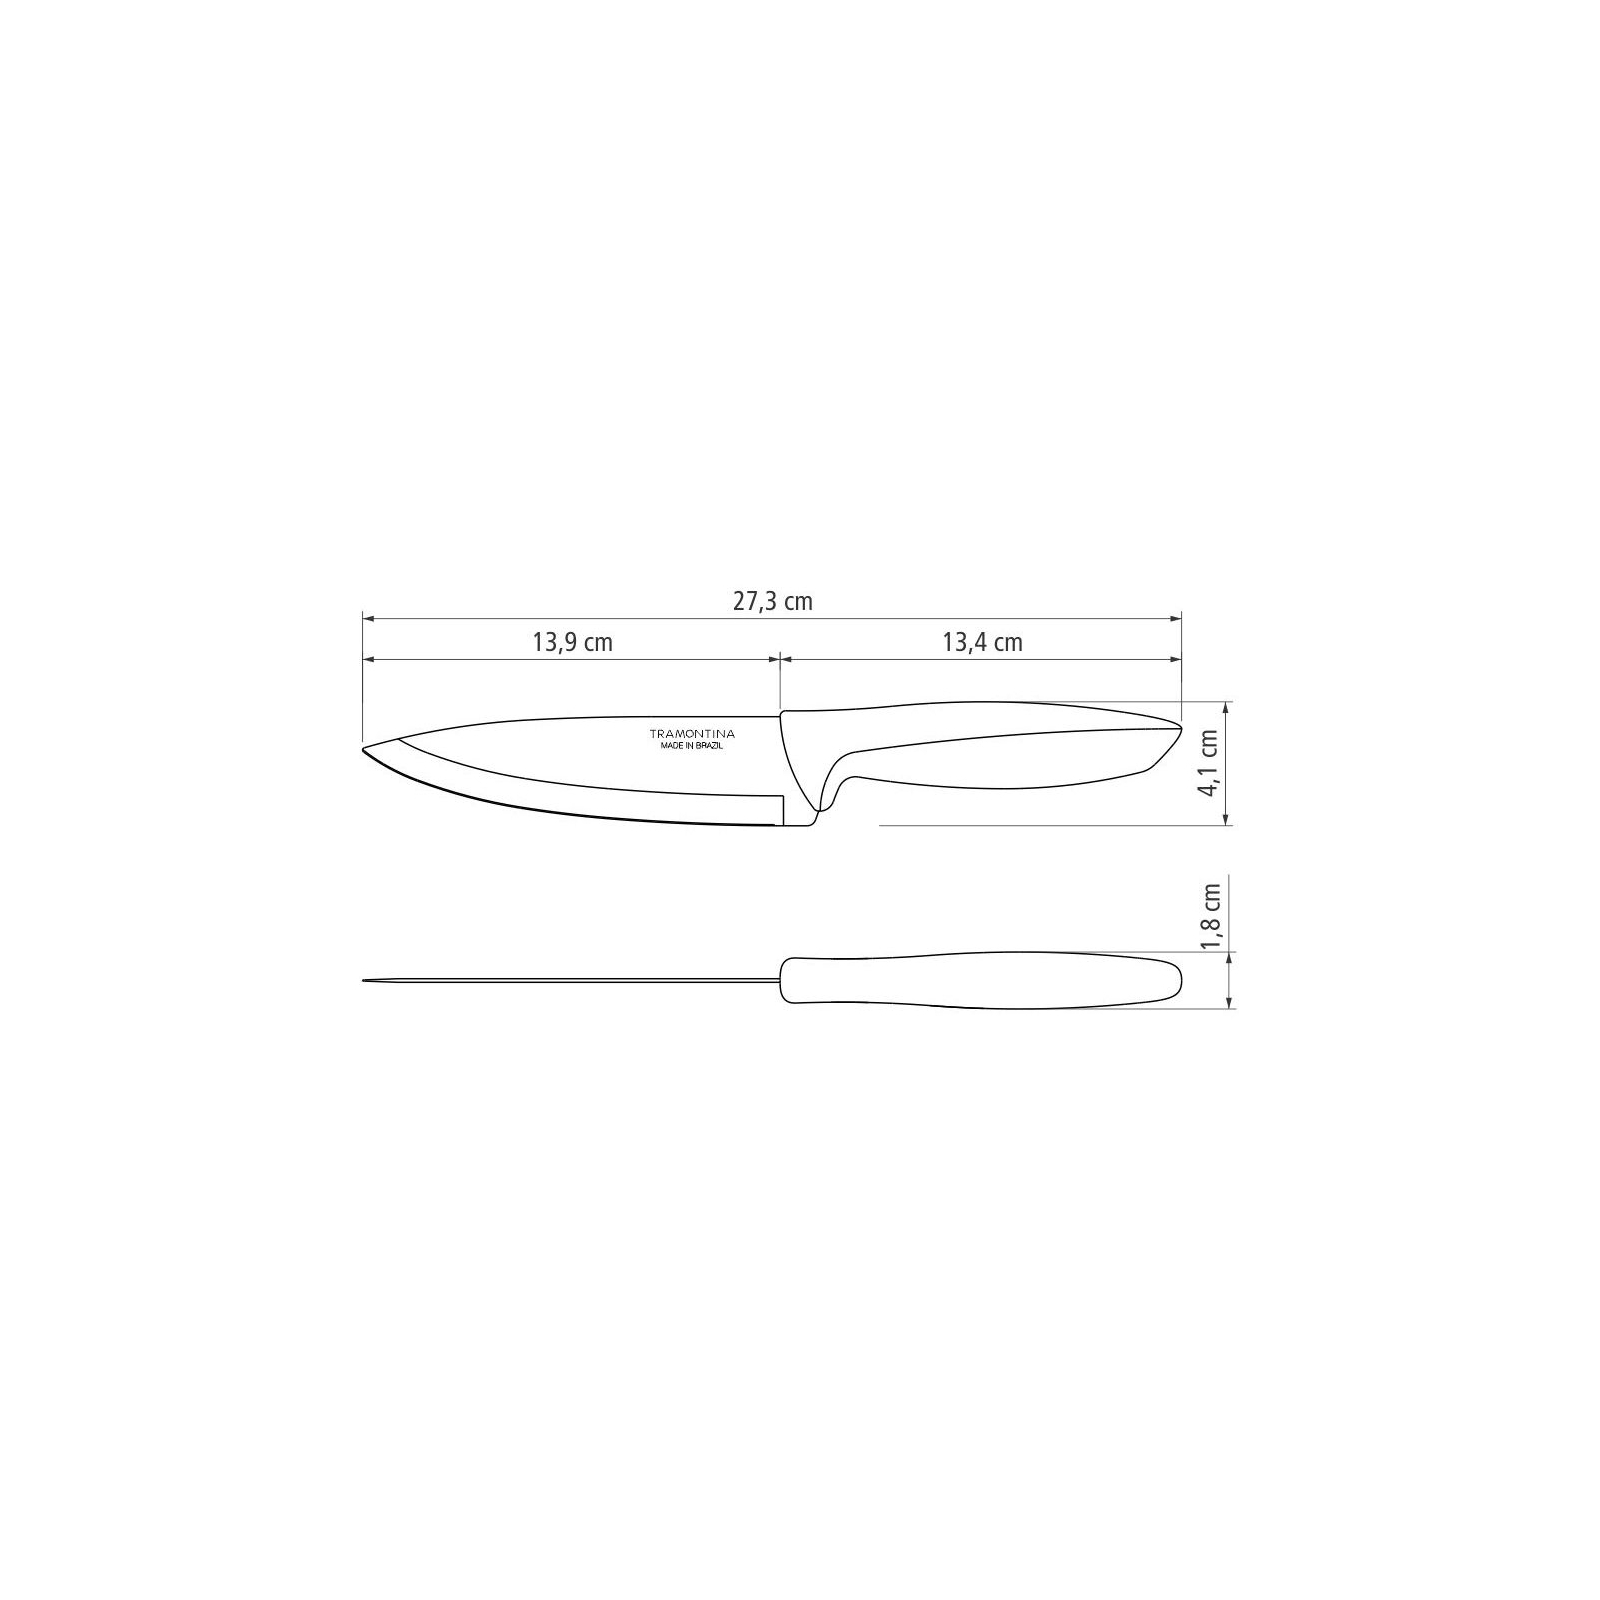 Кухонный нож Tramontina Plenus Black Chef 178 мм (23426/107) изображение 4